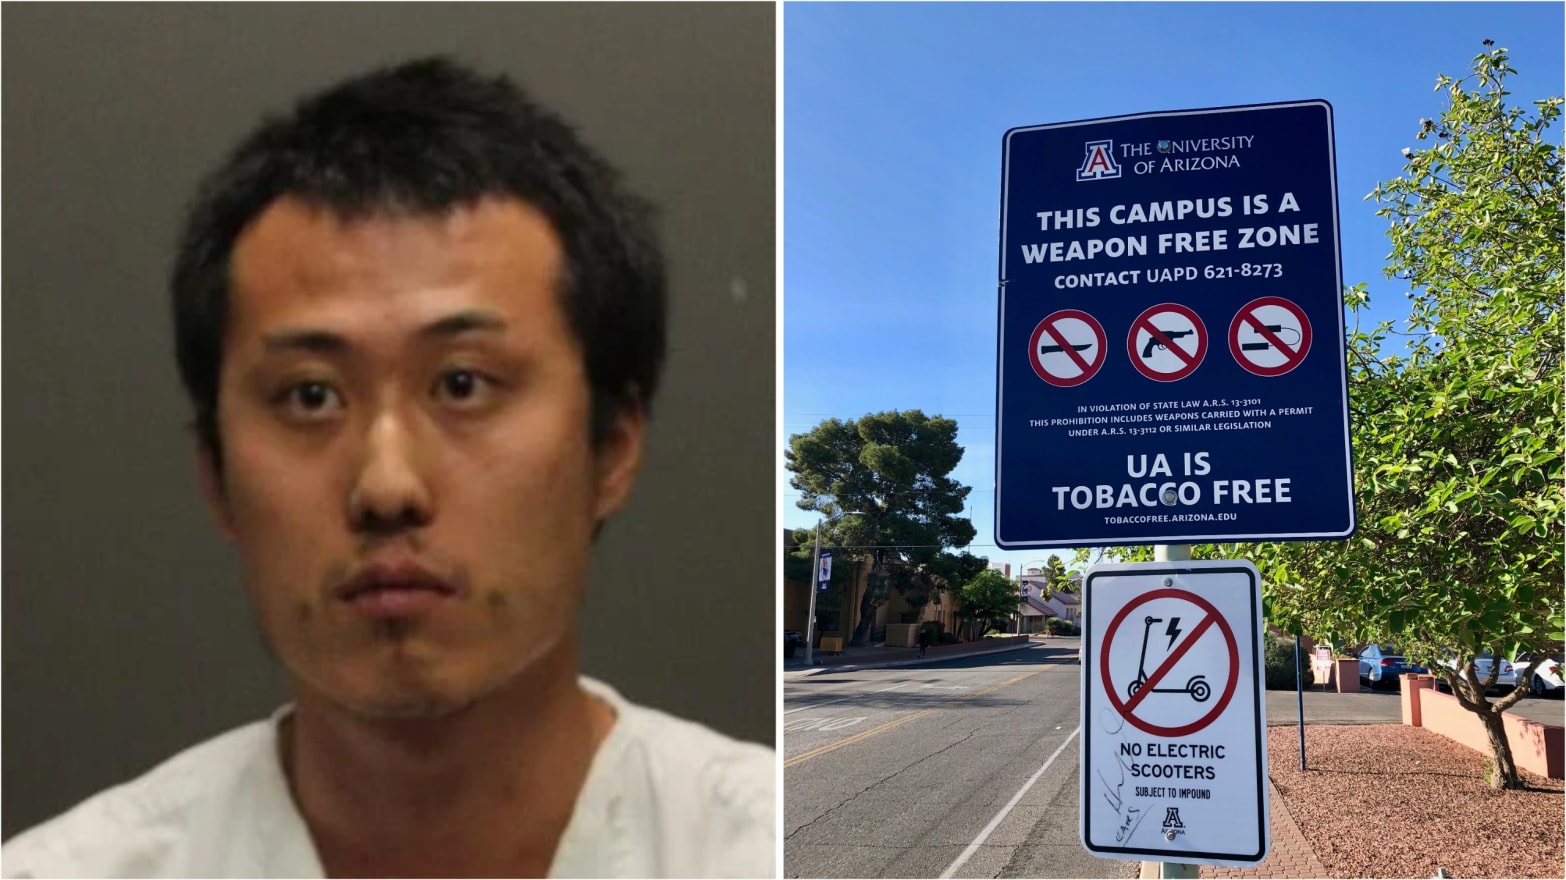 Man Arrested for Threatening Mass Shooting at University of Arizona